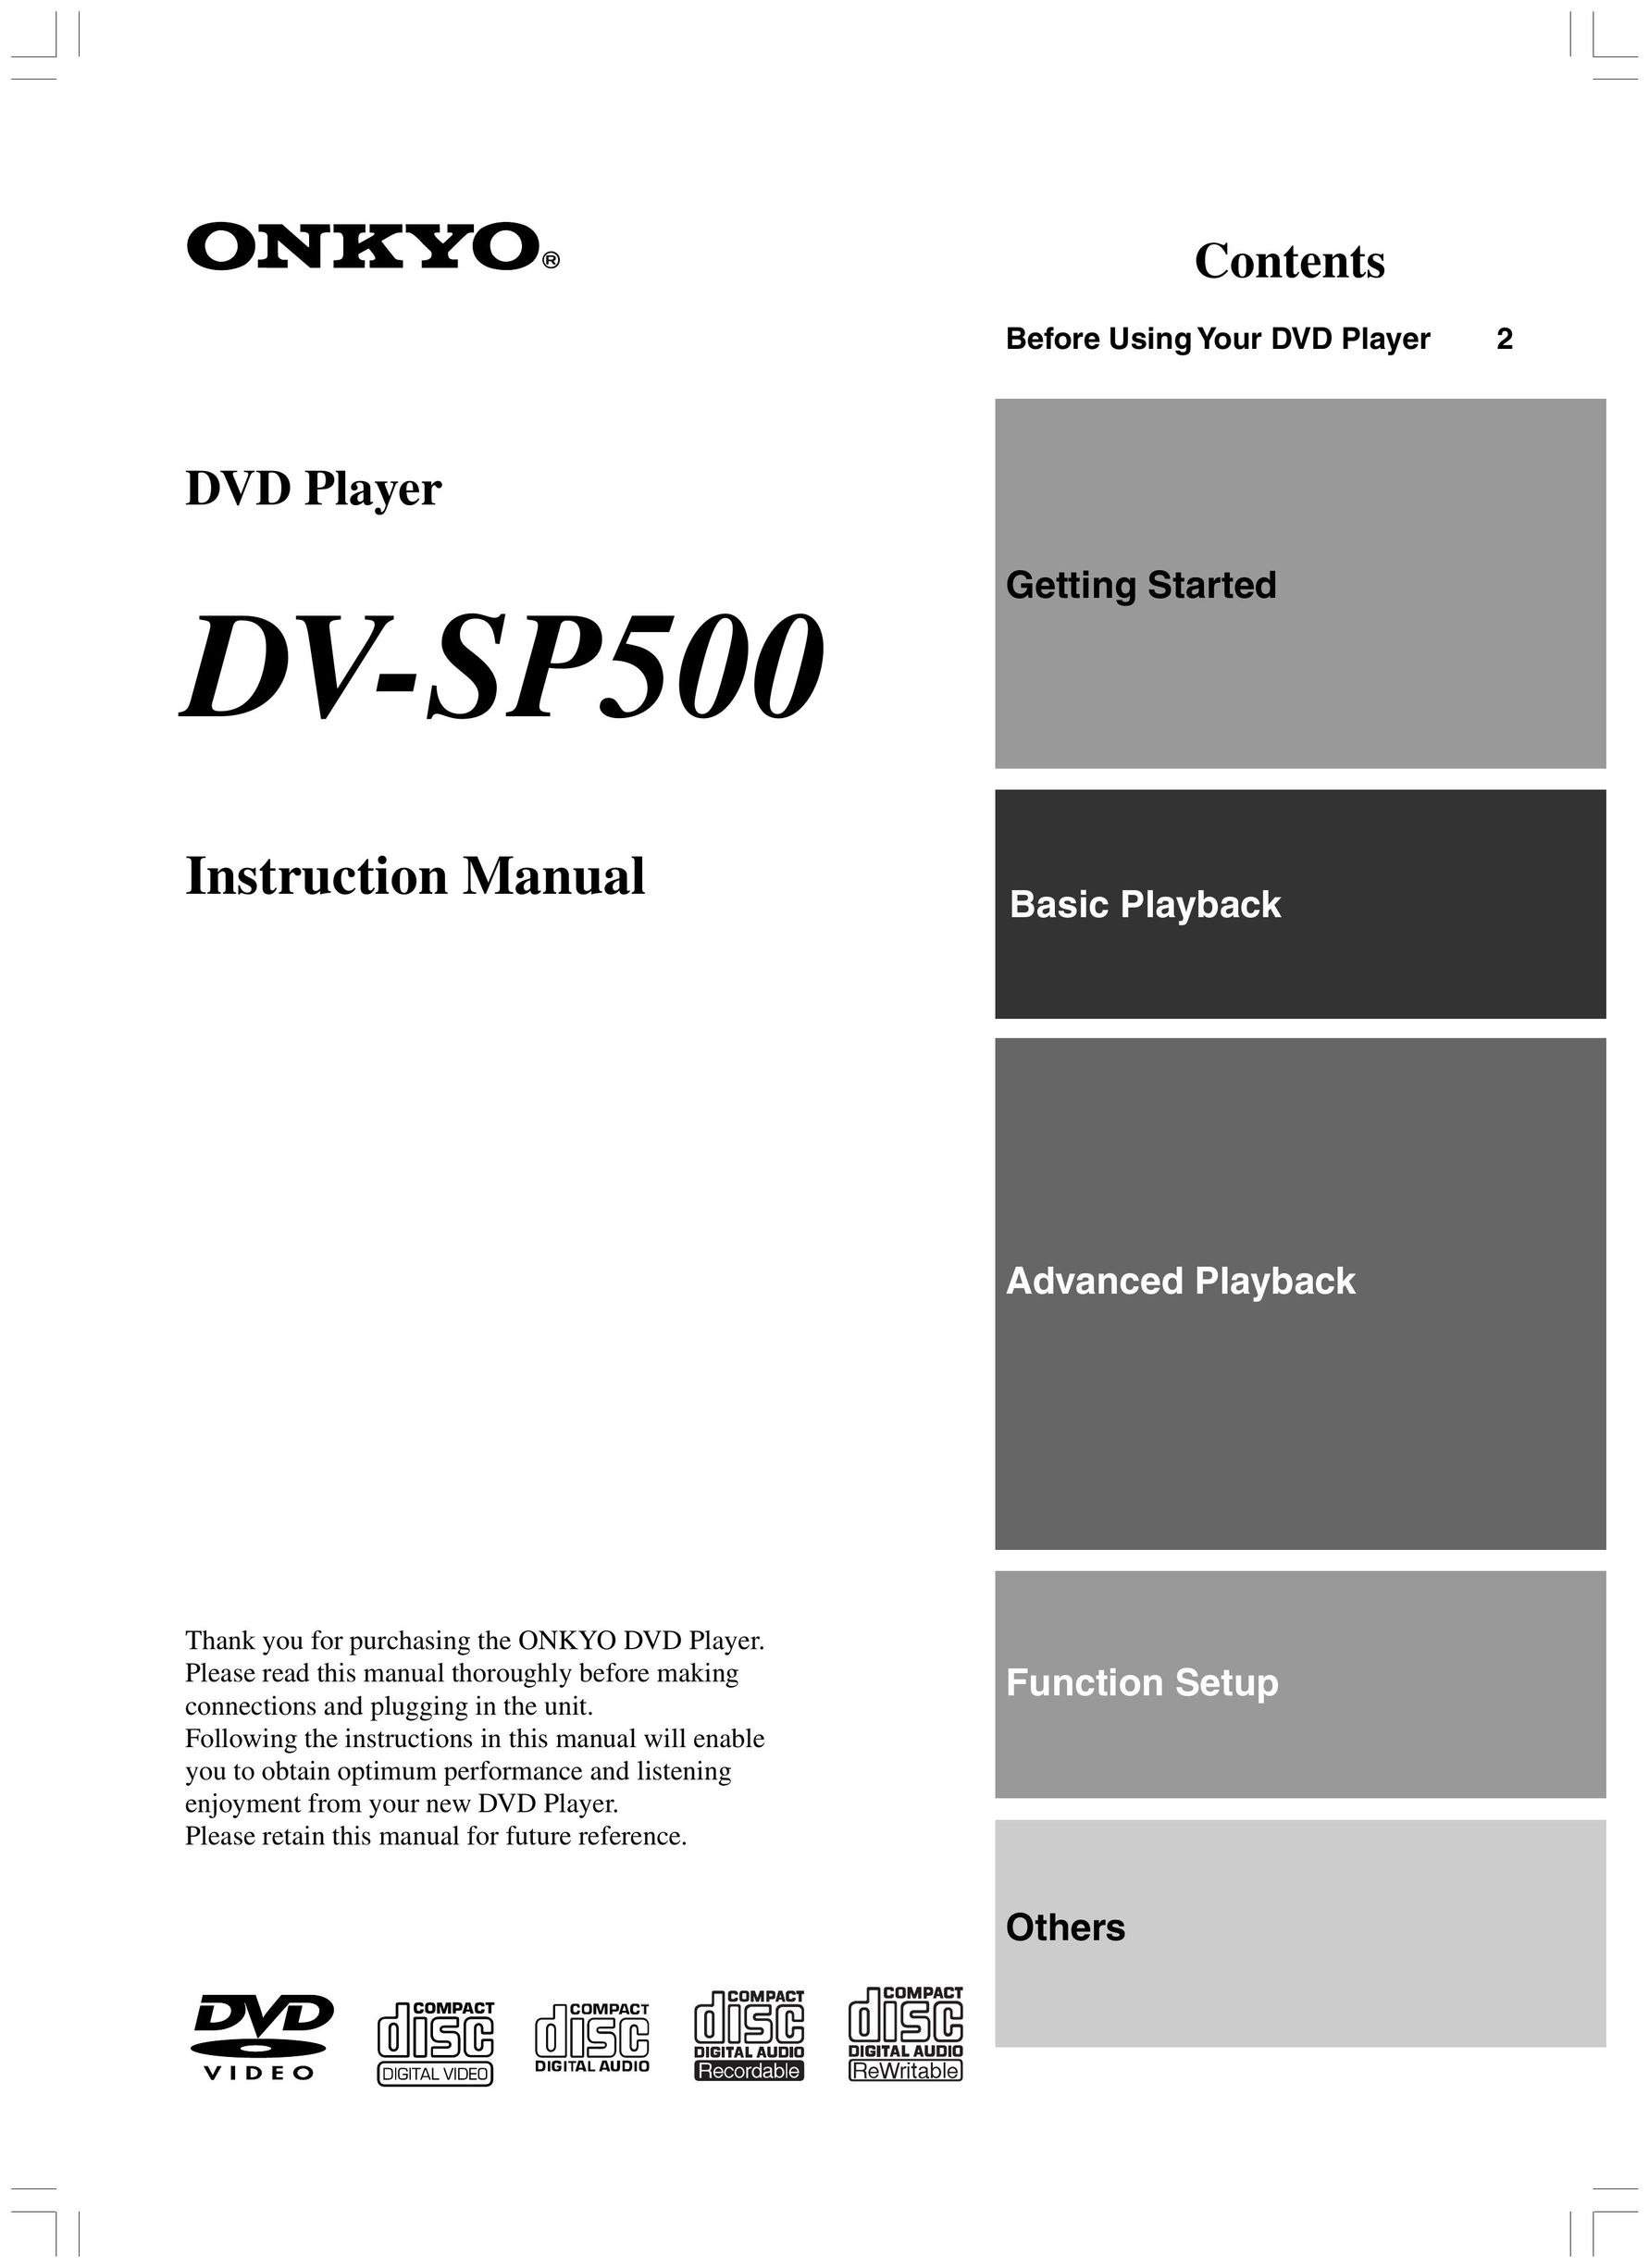 Onkyo DV-SP500 DVD Player User Manual